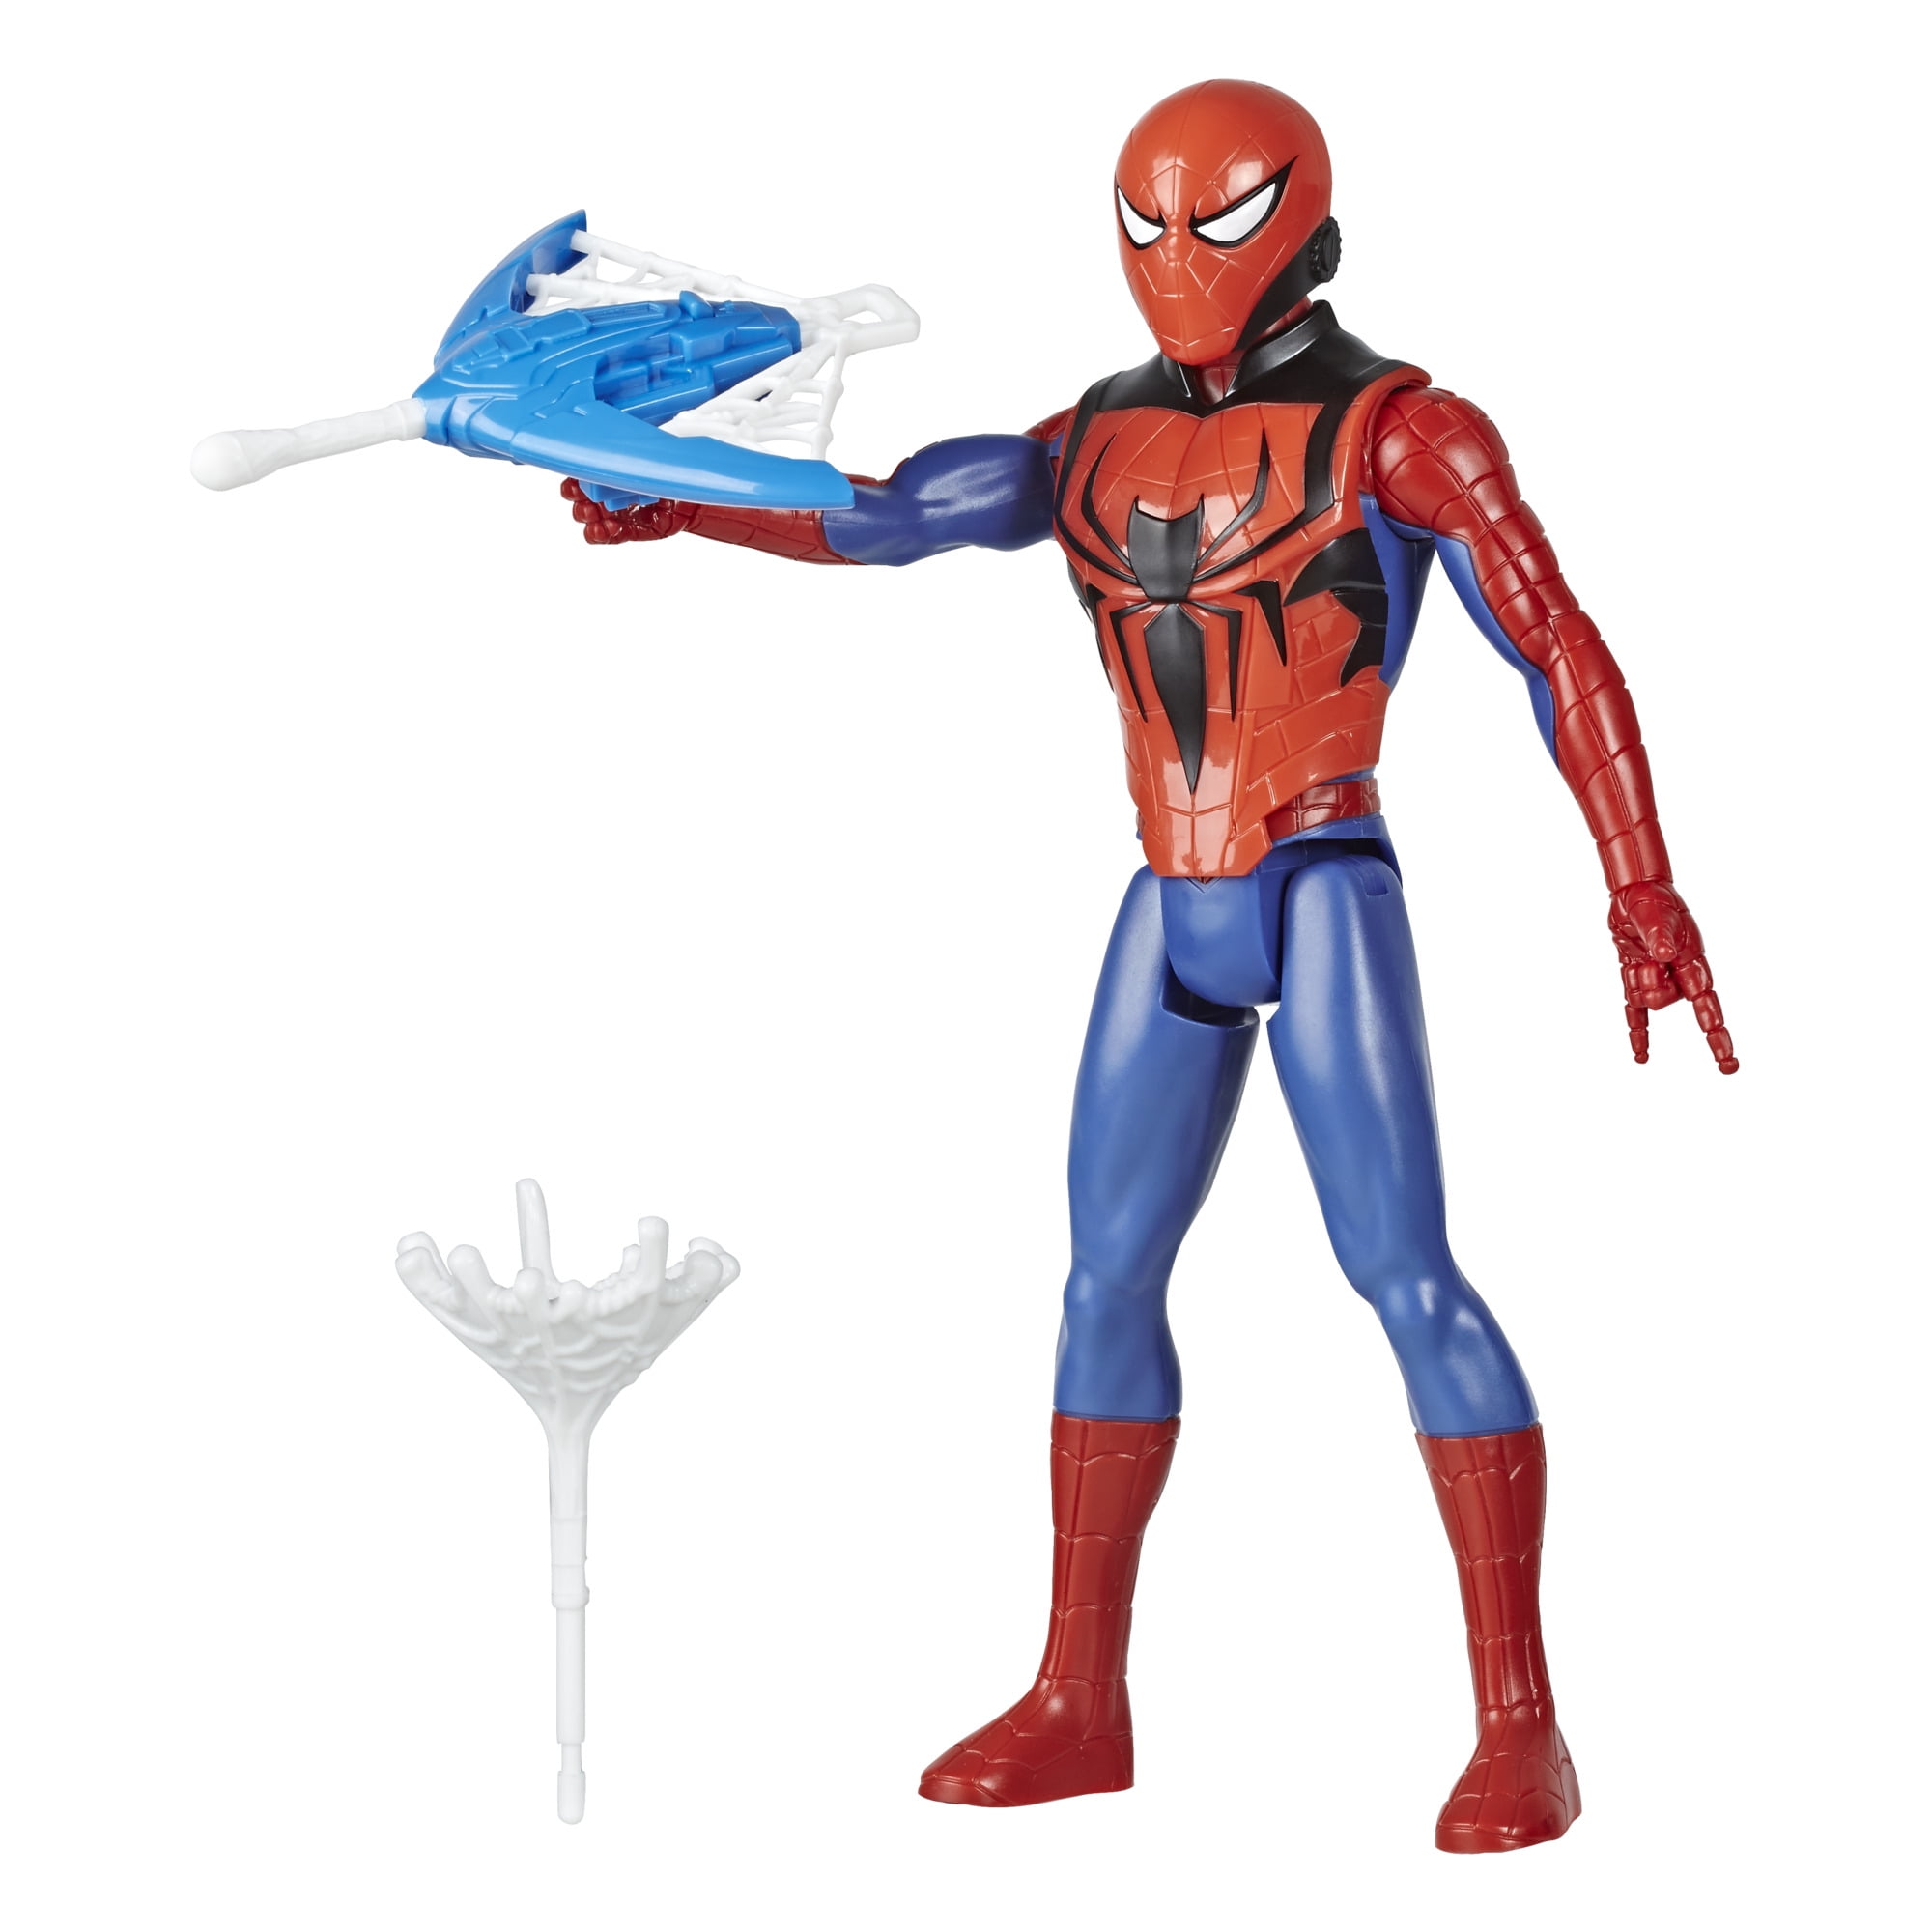 2019 12 PCS Kid's mini marvel figures super Iron hero Avenger Spider-Man Toy New 